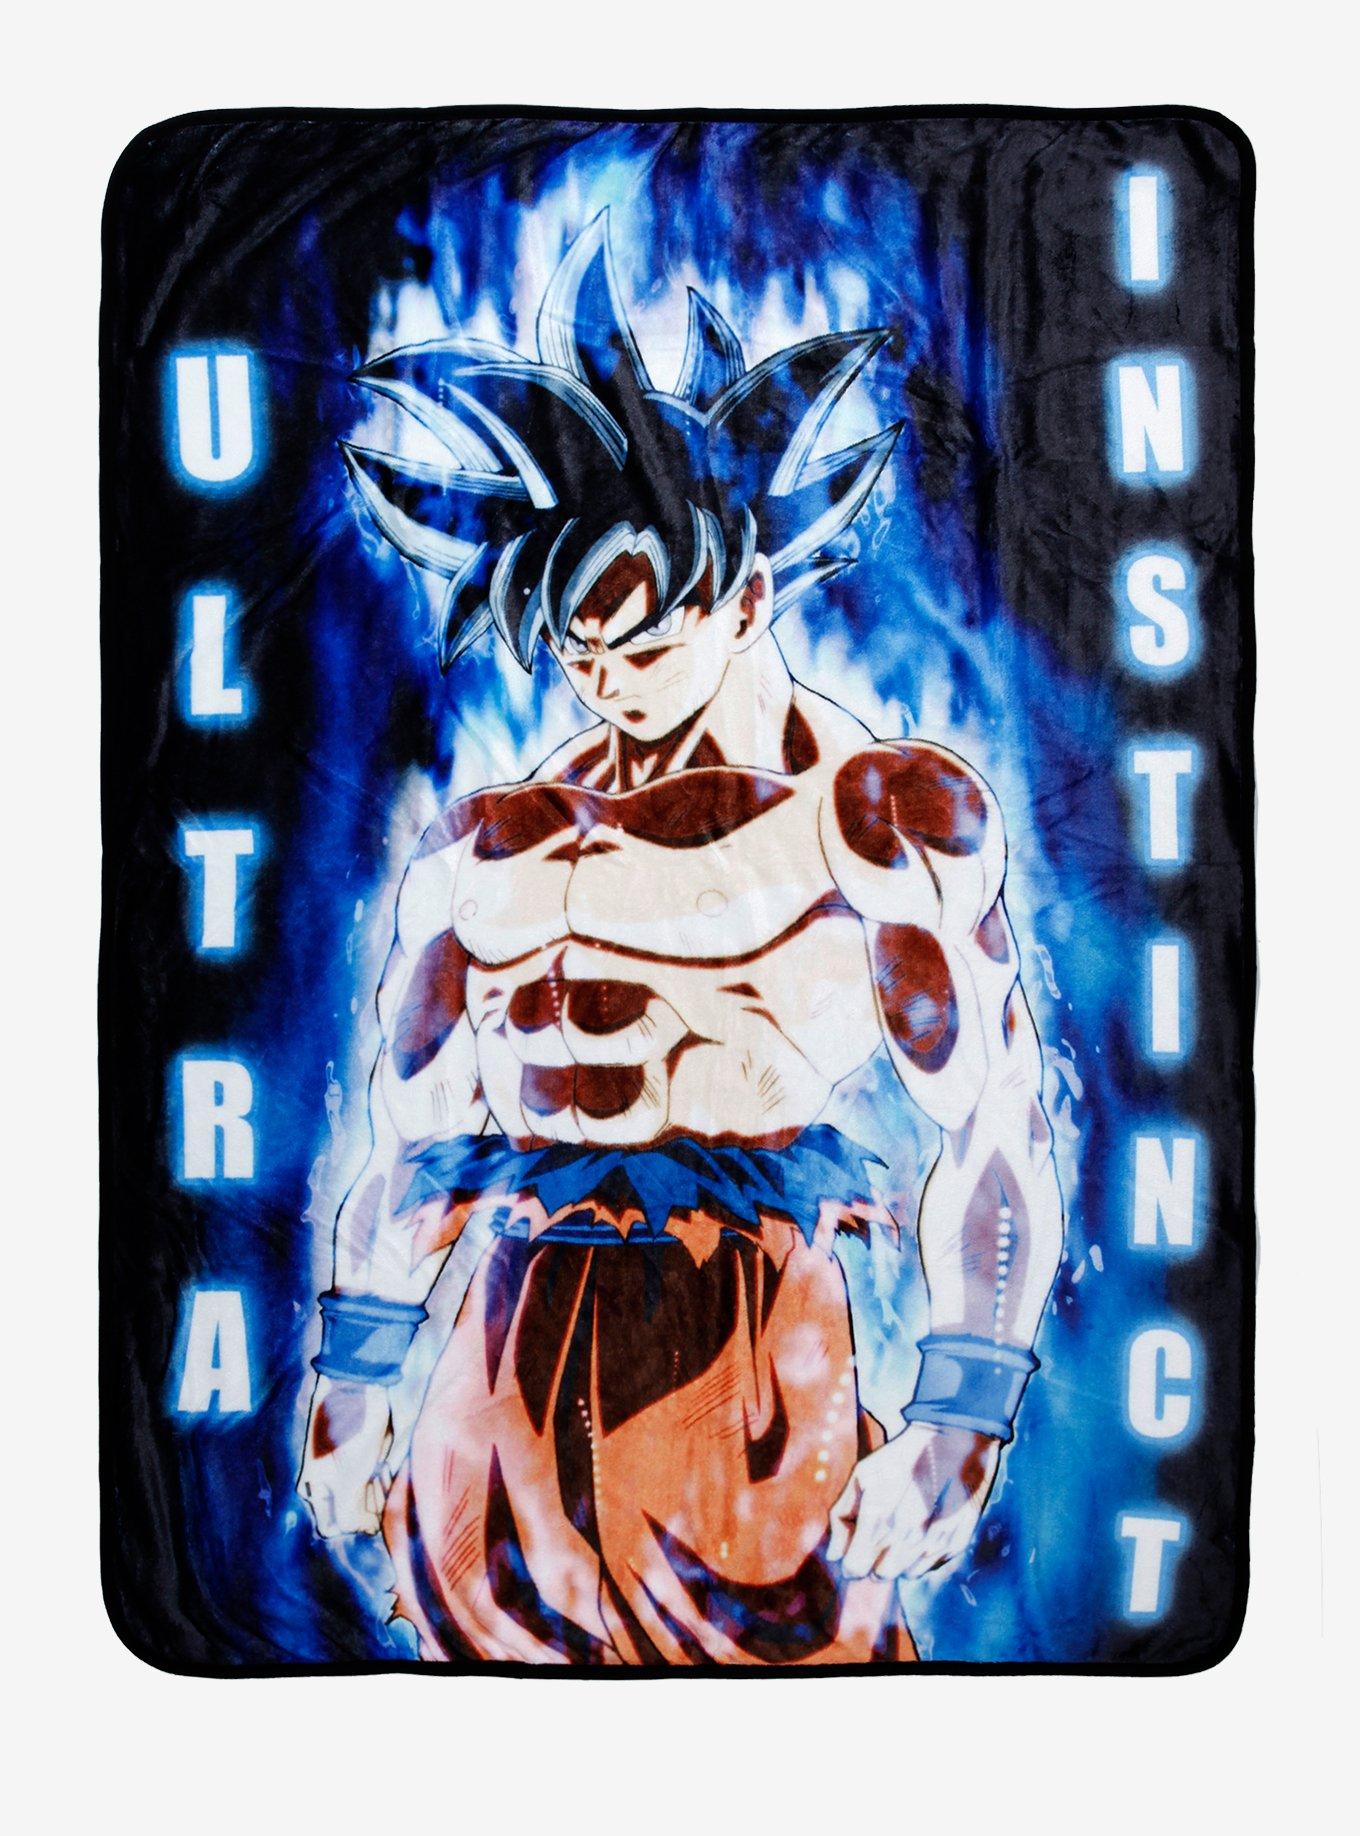 Dragon Ball Z Son Goku Super Saiyan Blue Awesome Throw Blanket